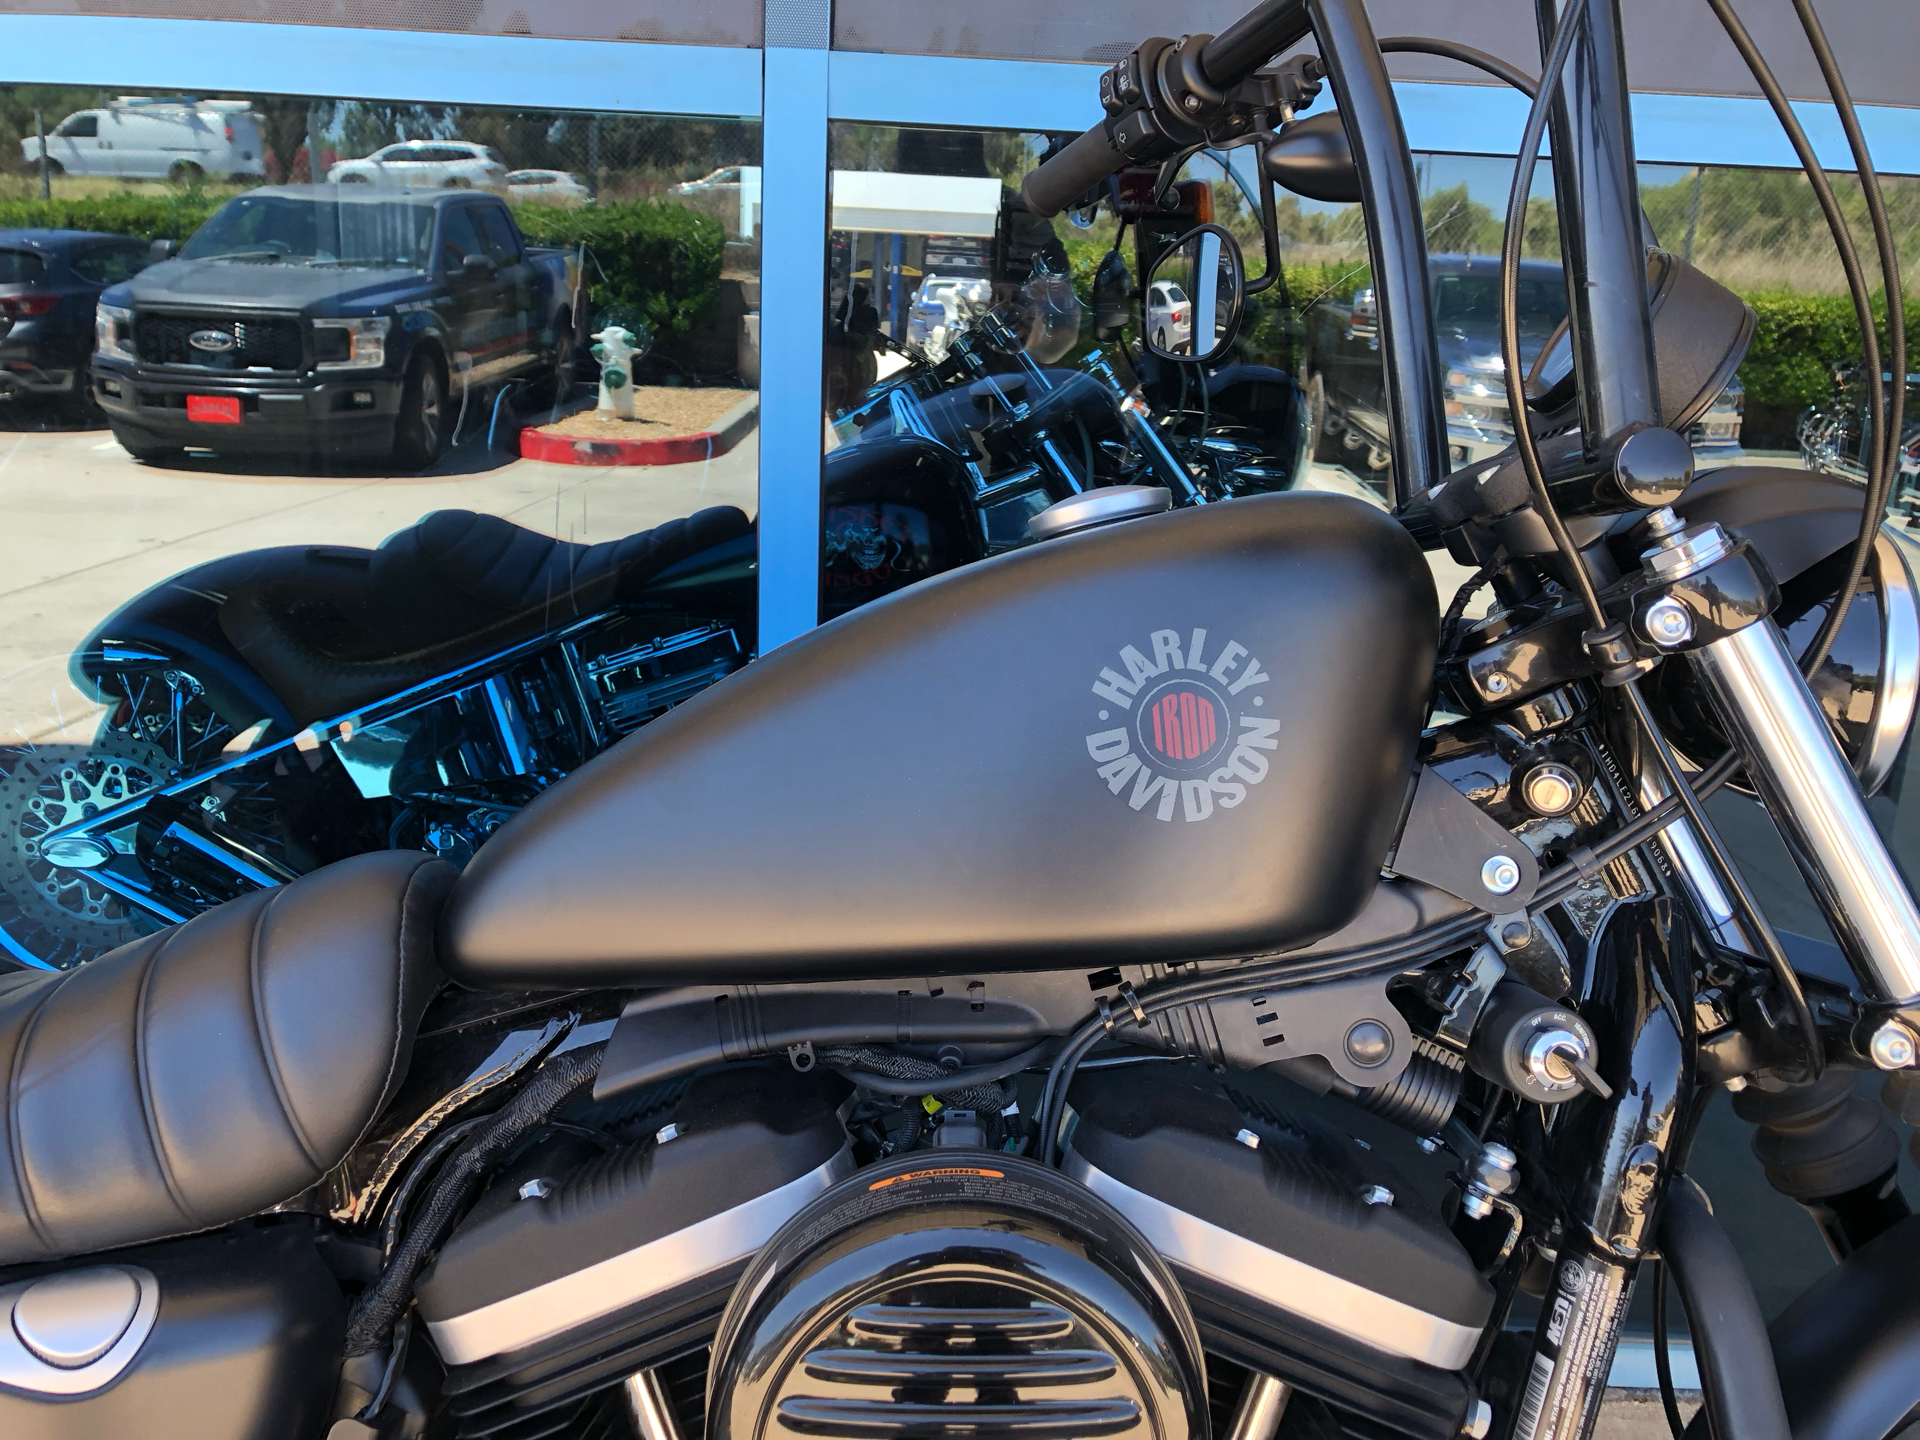 2021 Harley-Davidson Iron 883™ in Temecula, California - Photo 4